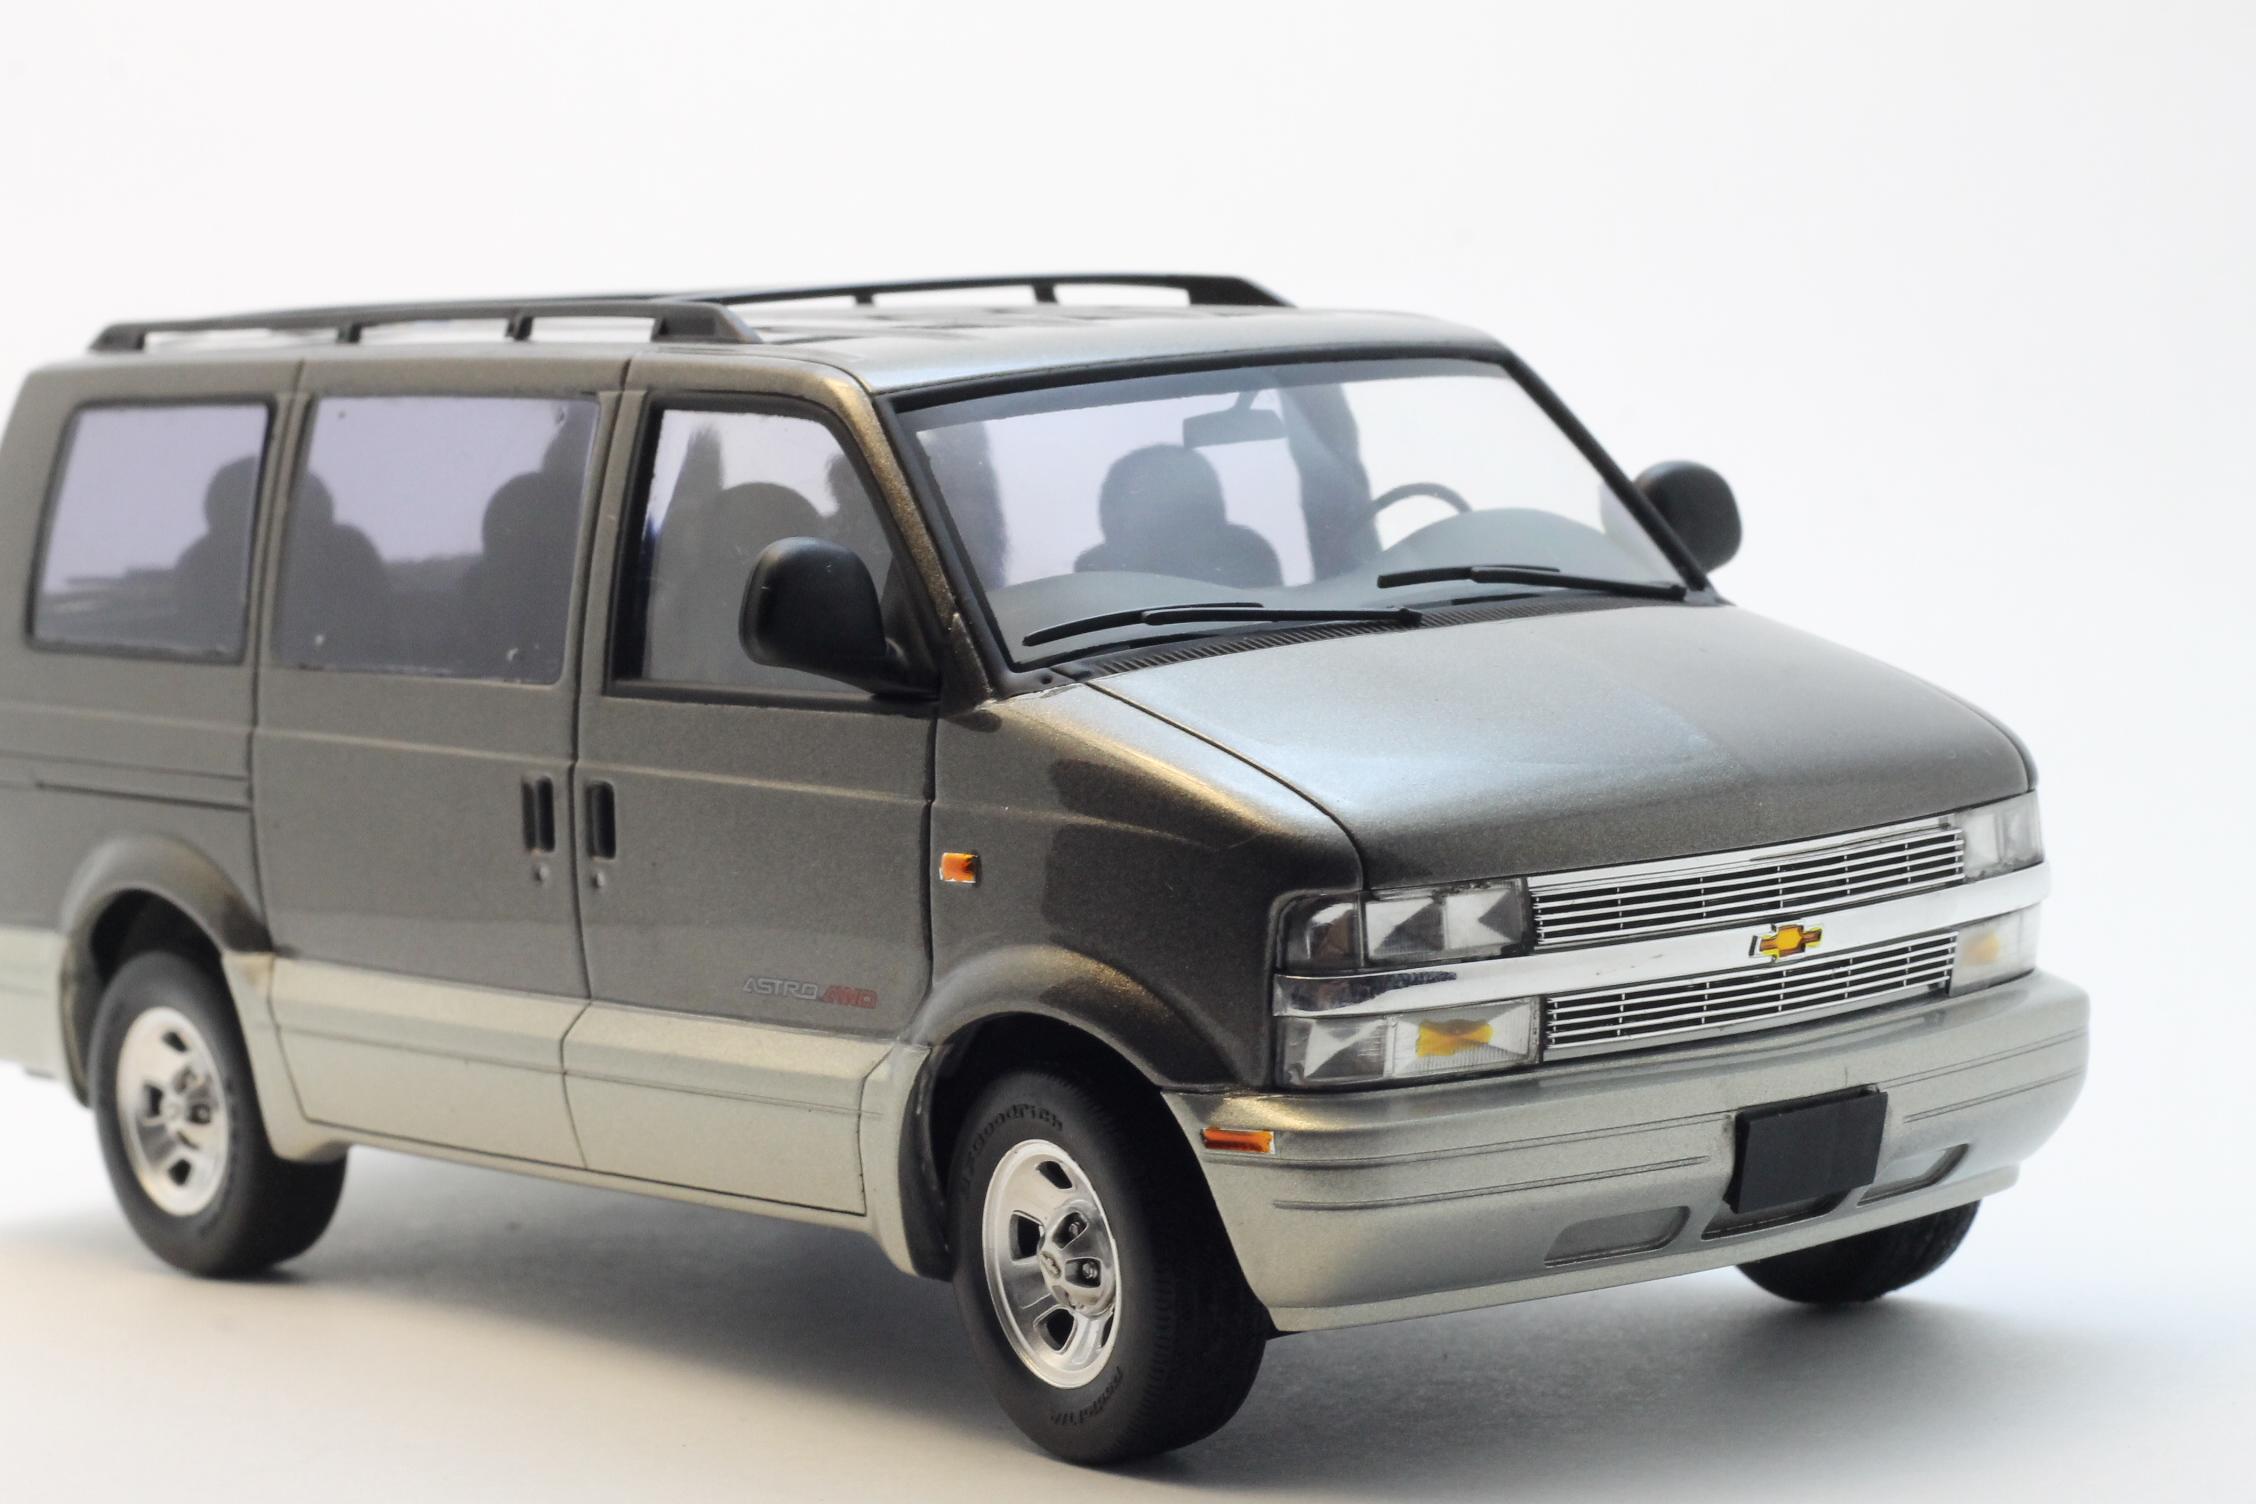 Chevrolet astro van ,fujimi 1:24 - Model Trucks: Pickups, Vans, SUVs, Light  Commercial - Model Cars Magazine Forum